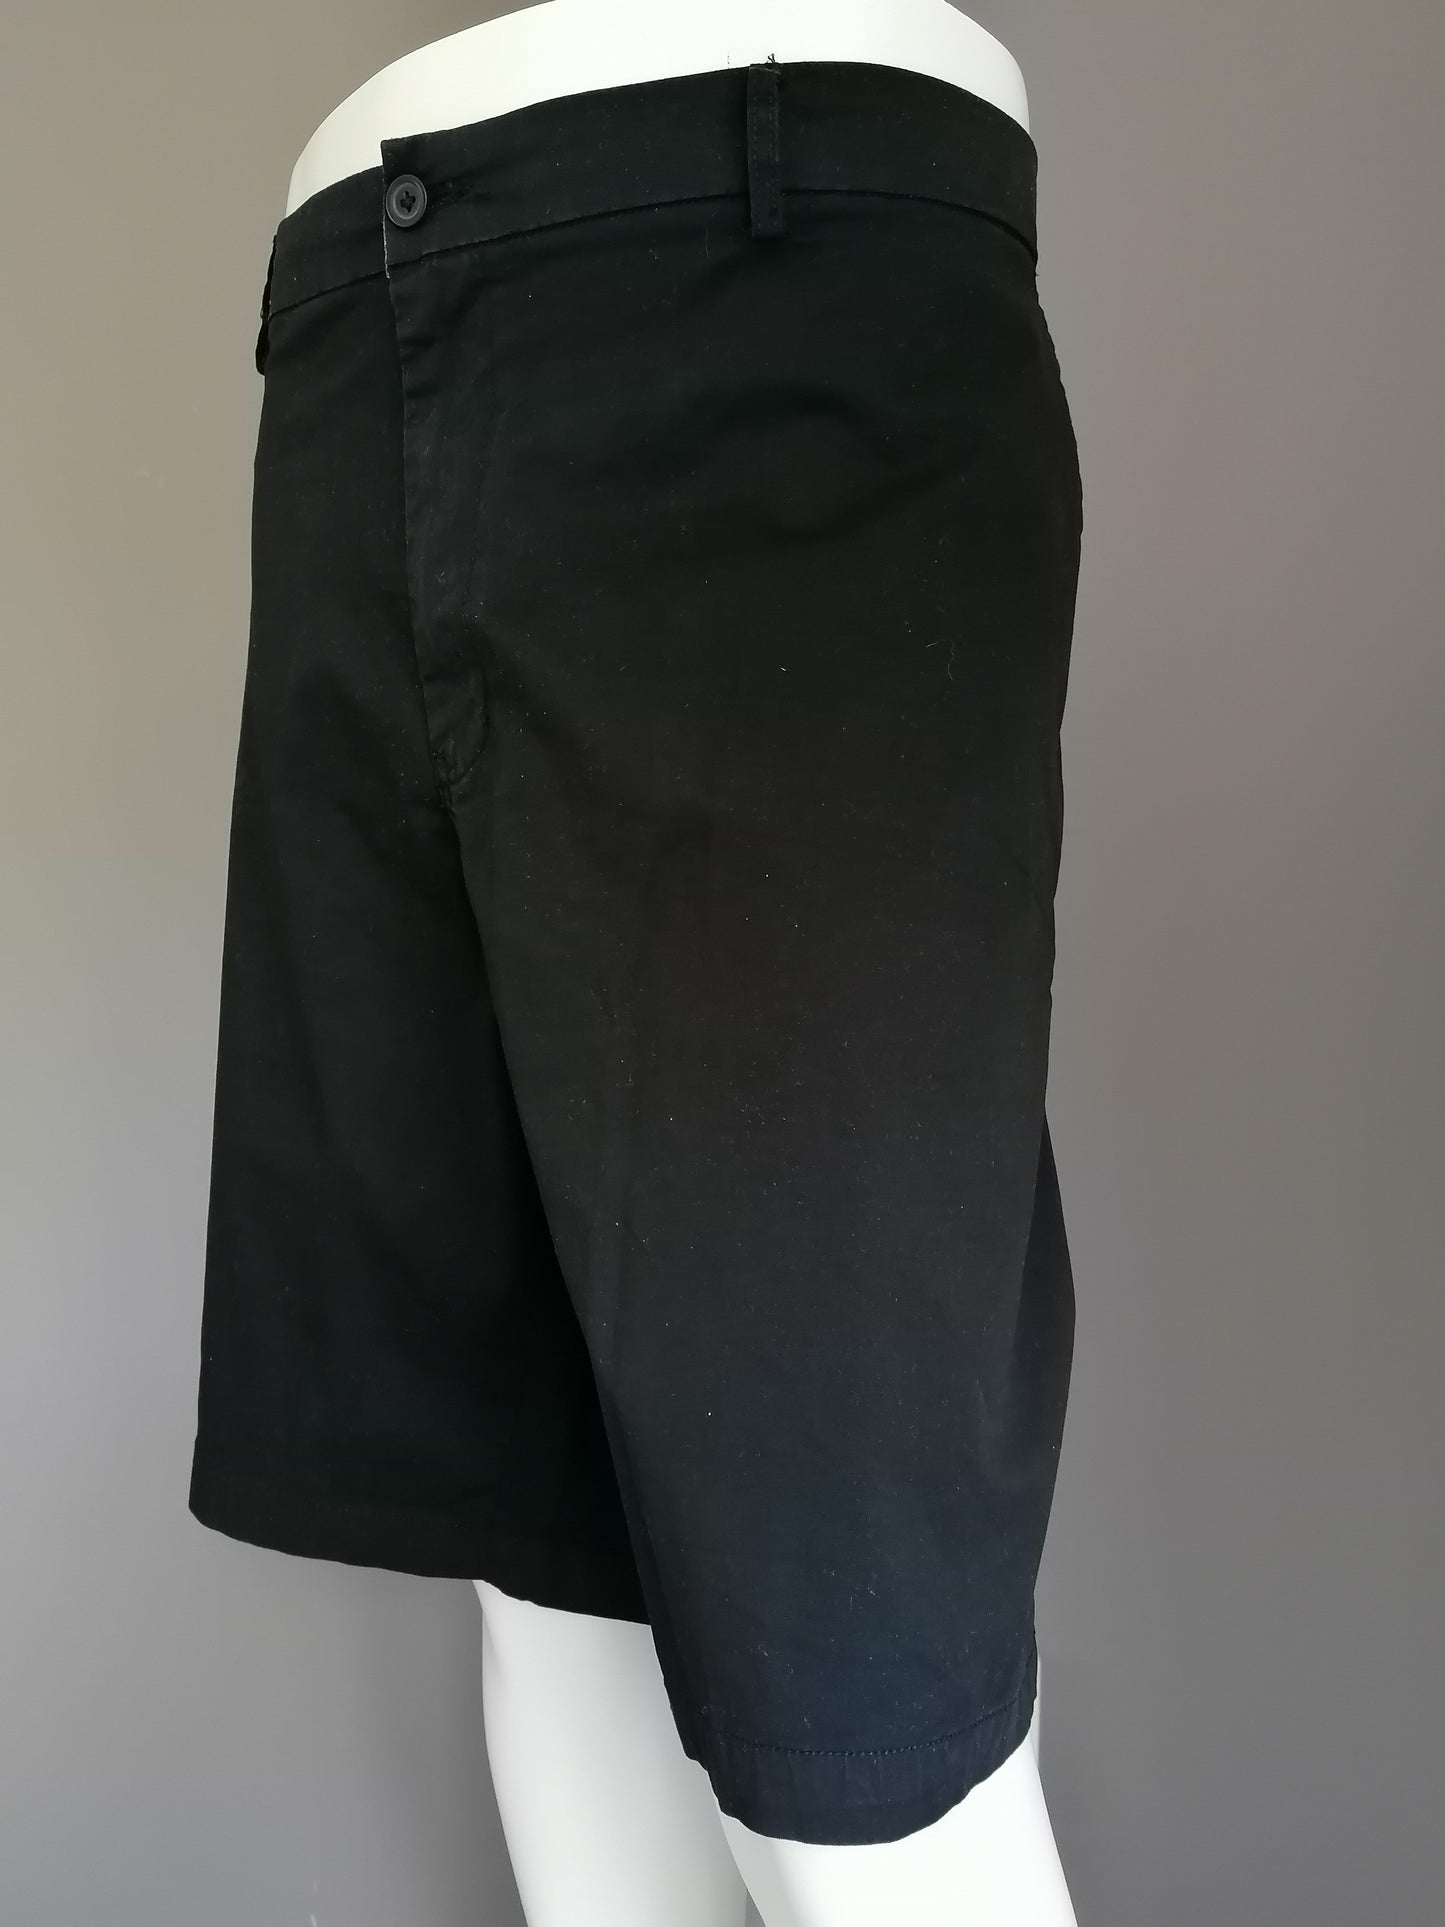 Capsule men shorts. Black colored. Size W54. Stretch